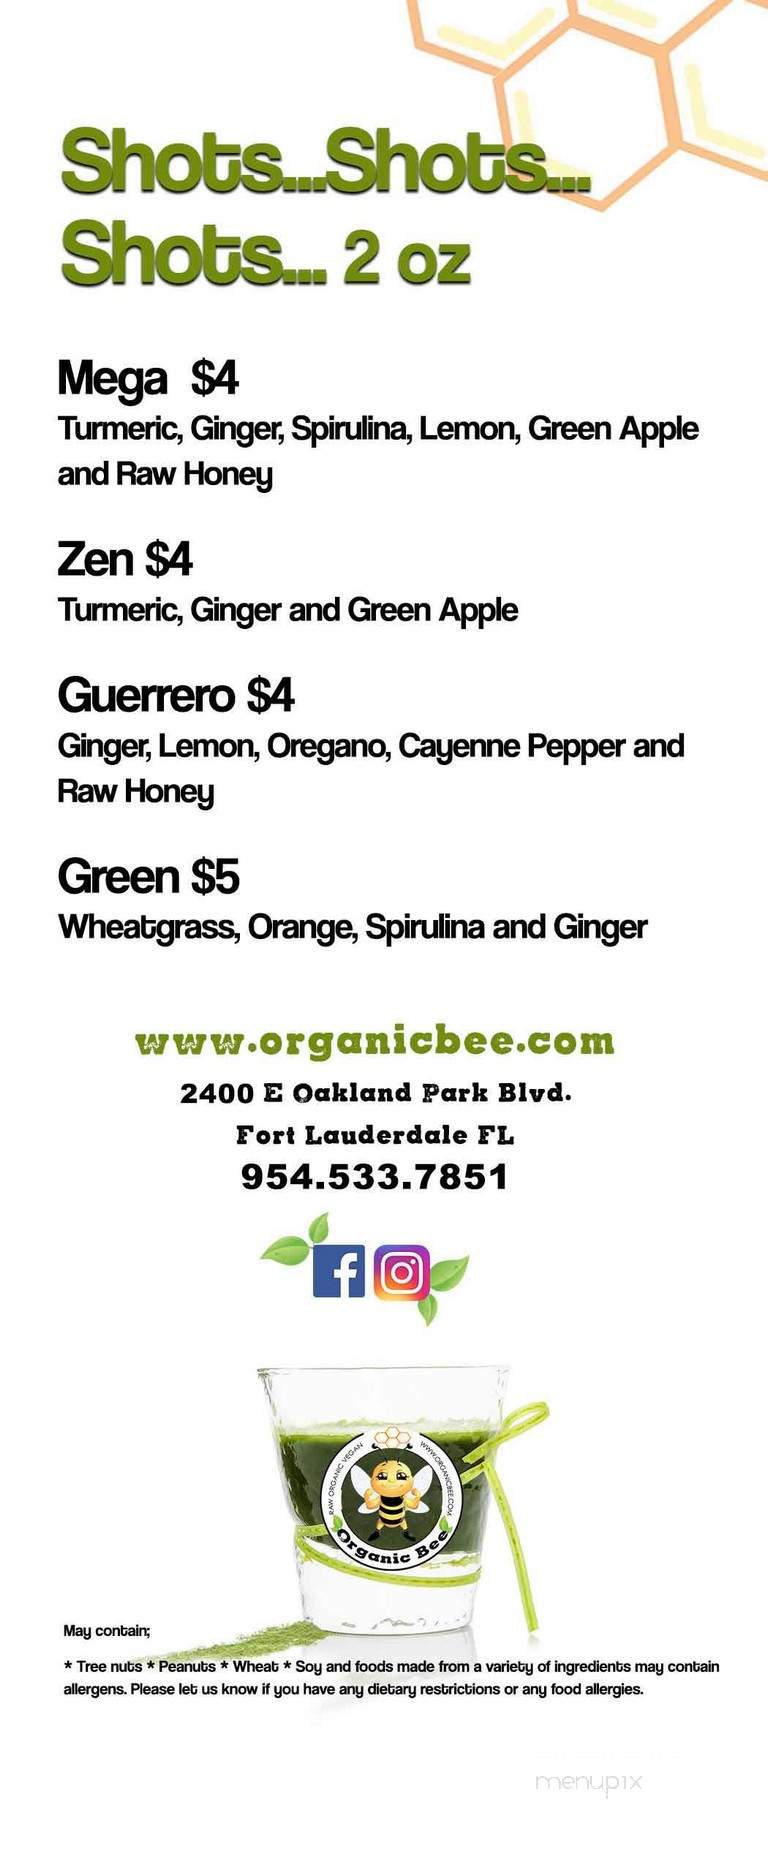 Organic Bee - Fort Lauderdale, FL